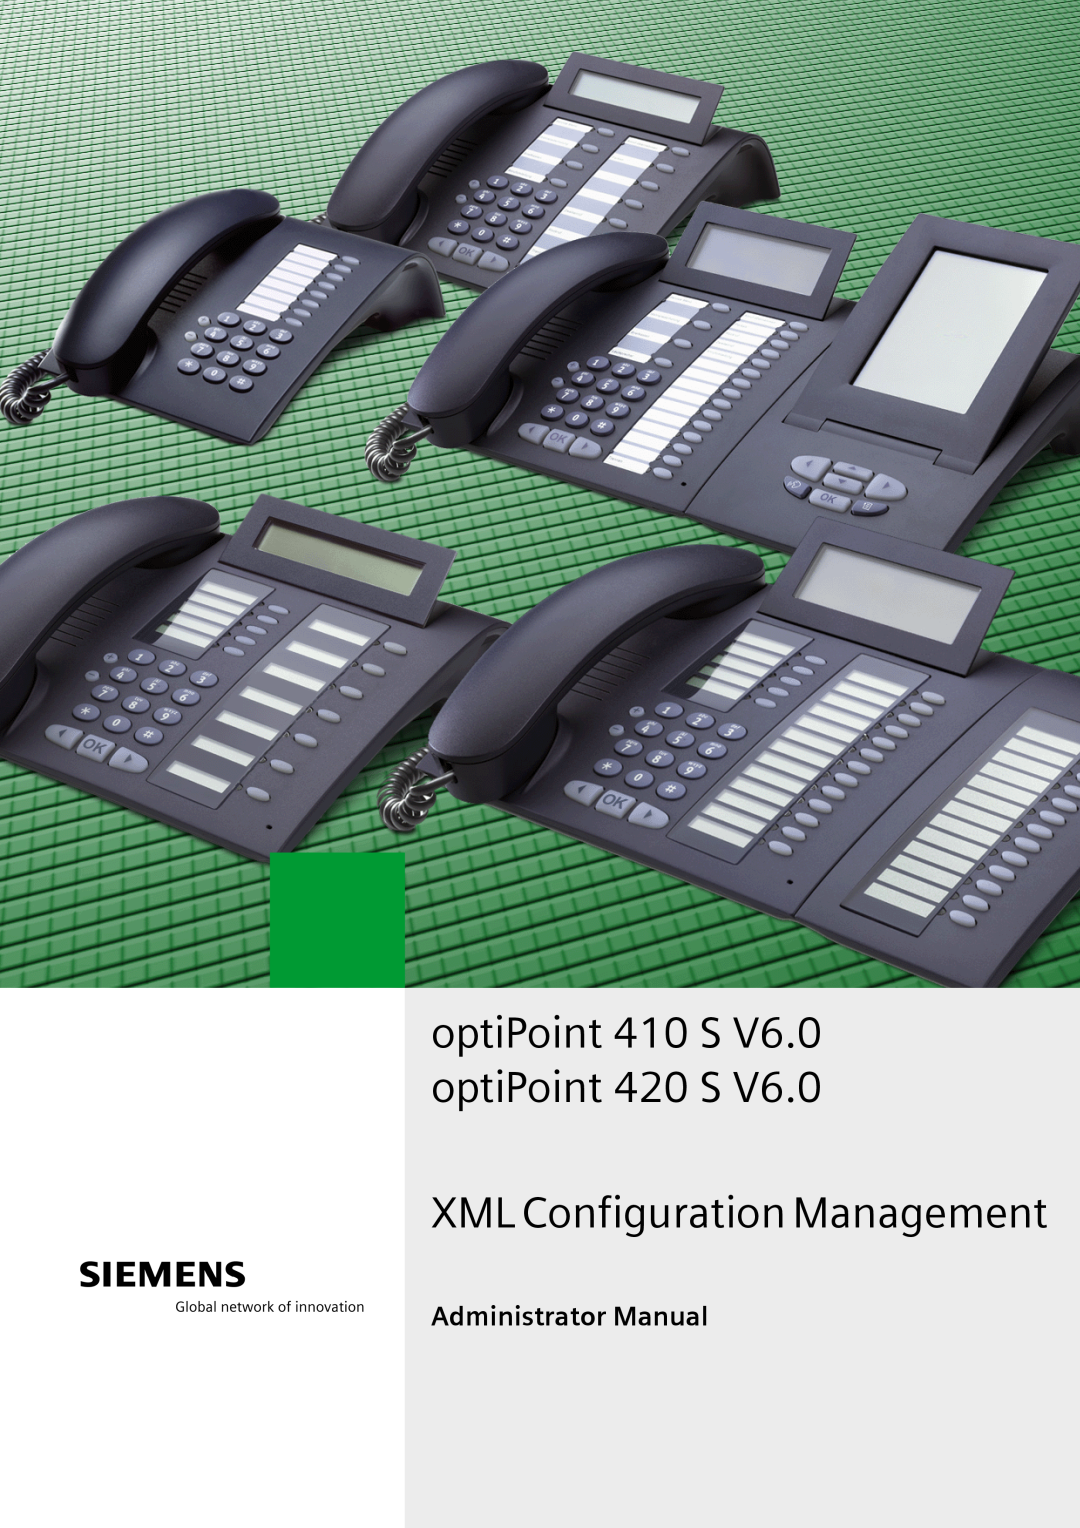 Siemens 420 S V6.0 manual optiPoint 410 S V6.0 optiPoint 420 S XML Configuration Management, Administrator Manual 